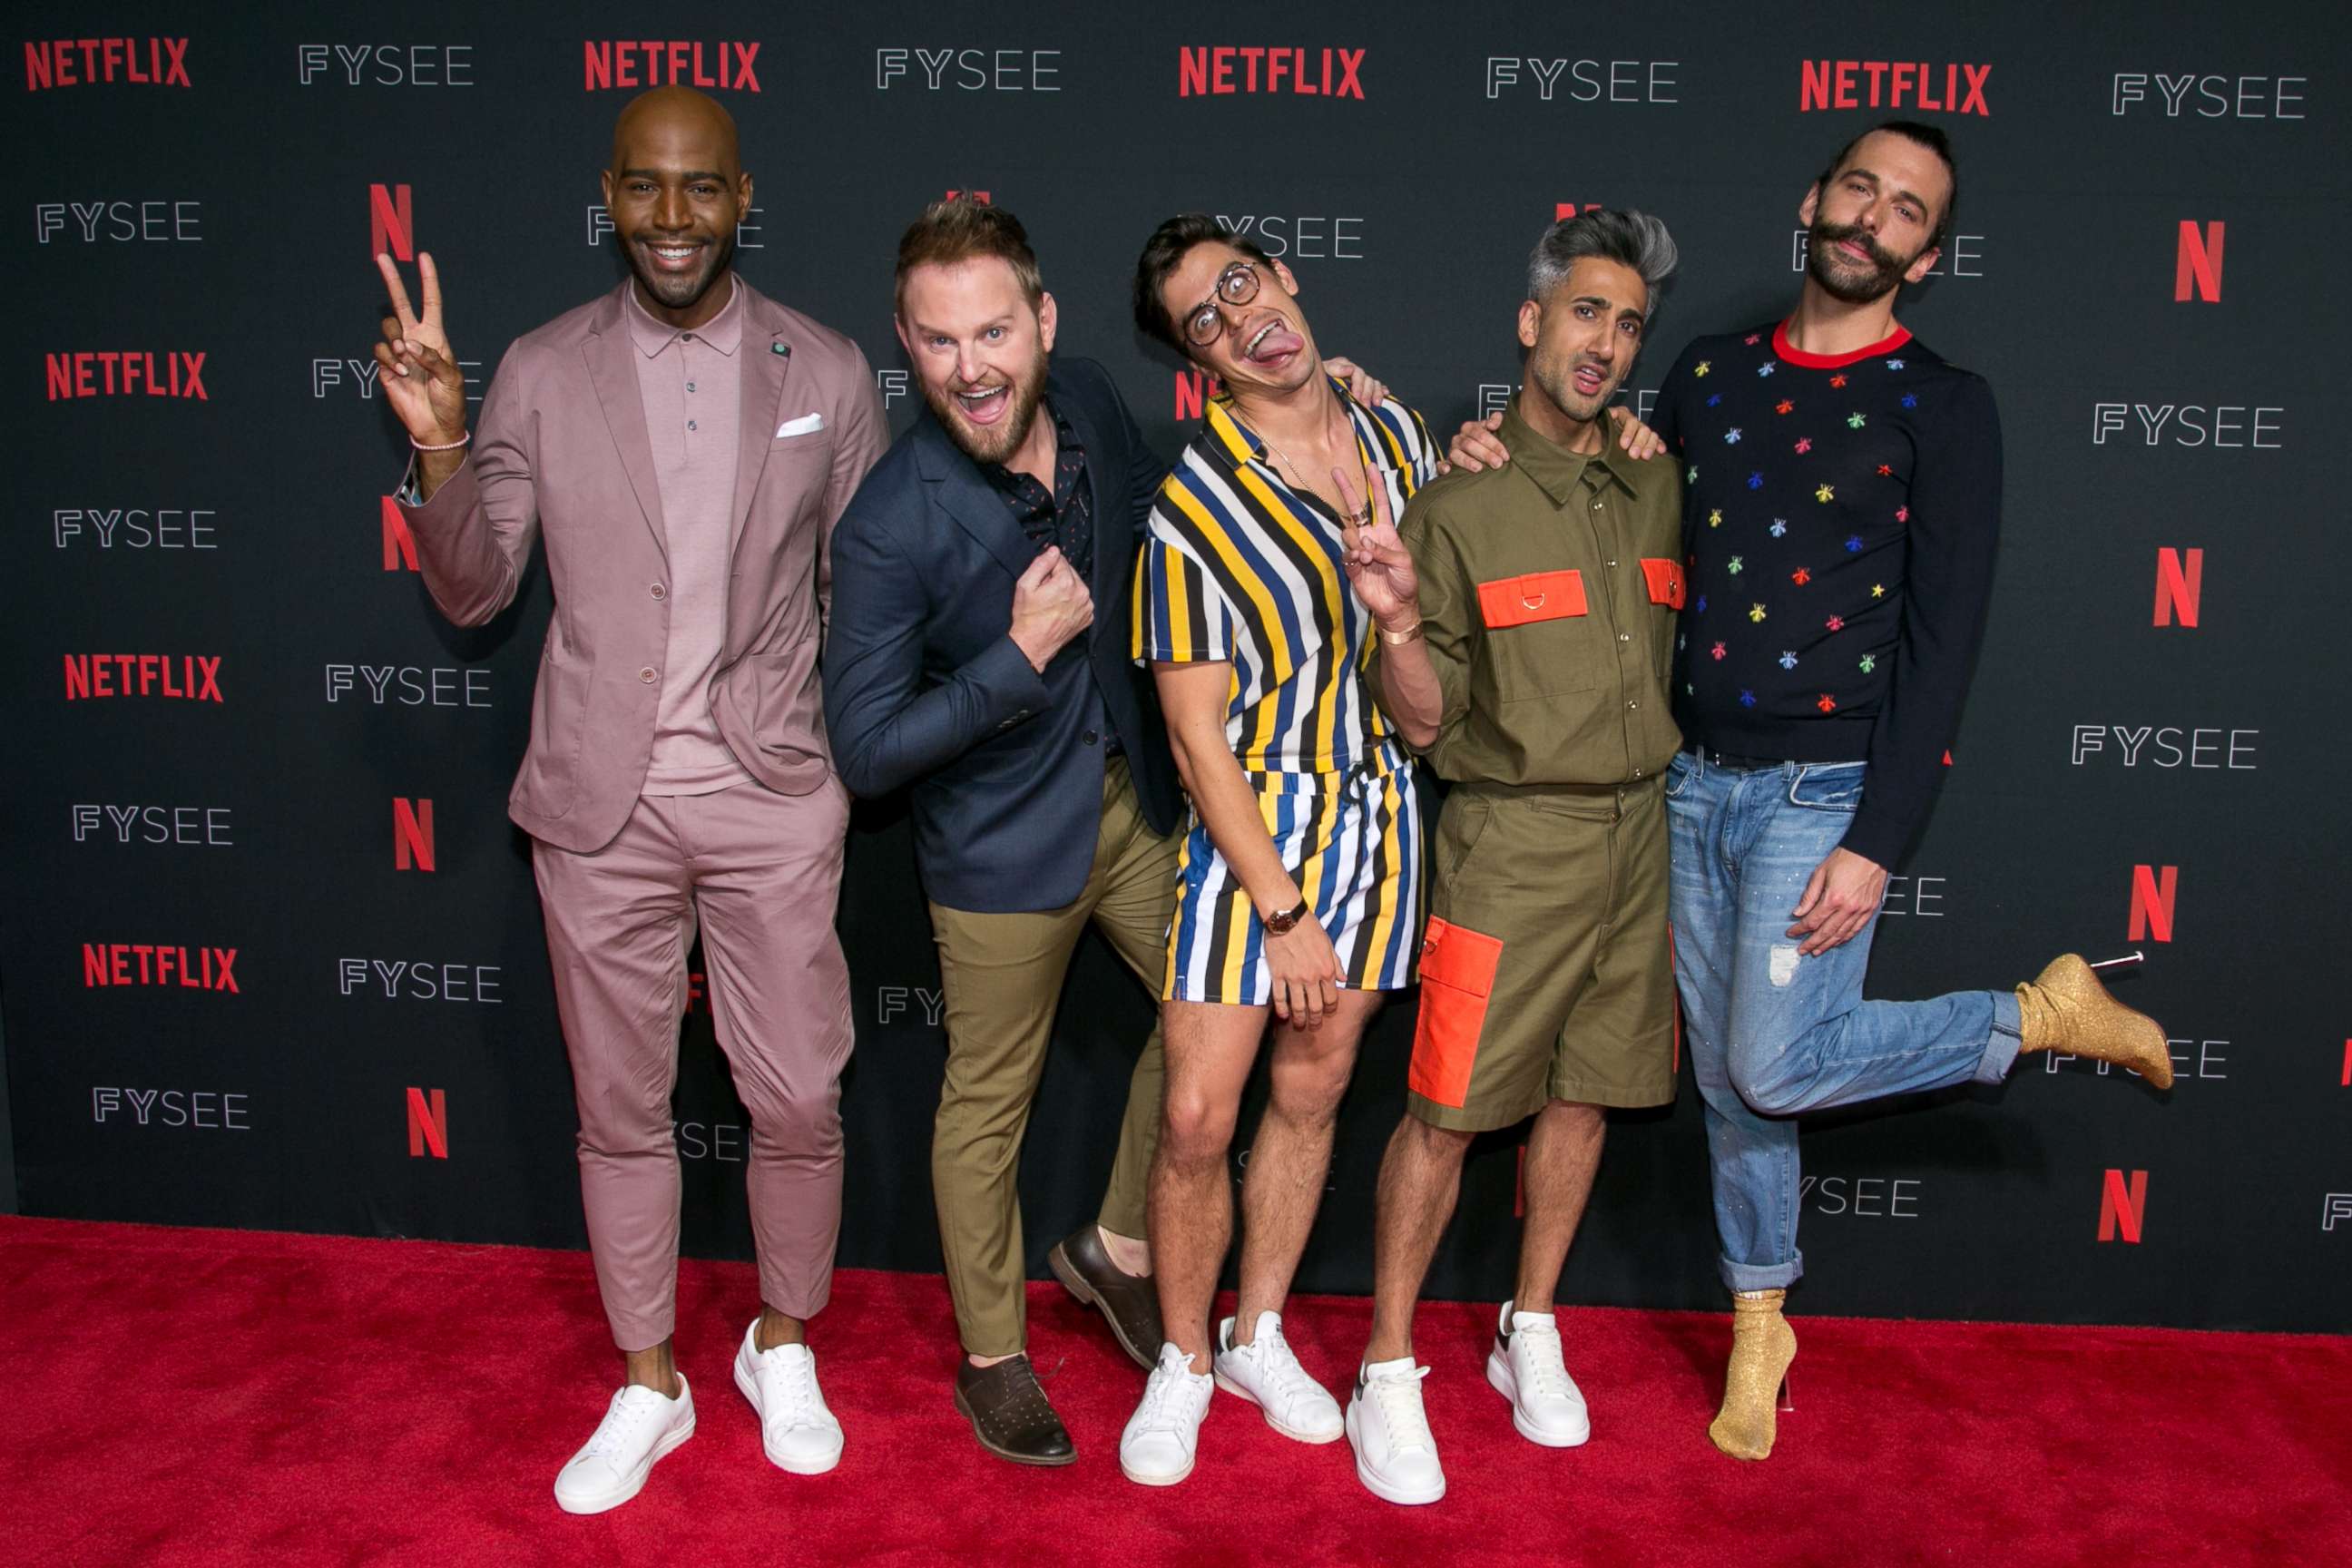 PHOTO: Karamo Brown, Bobby Berk, Antoni Porowski, Tan France and Jonathan Van Ness attend a Netflix event at Raleigh Studios on May 31, 2018 in Los Angeles.